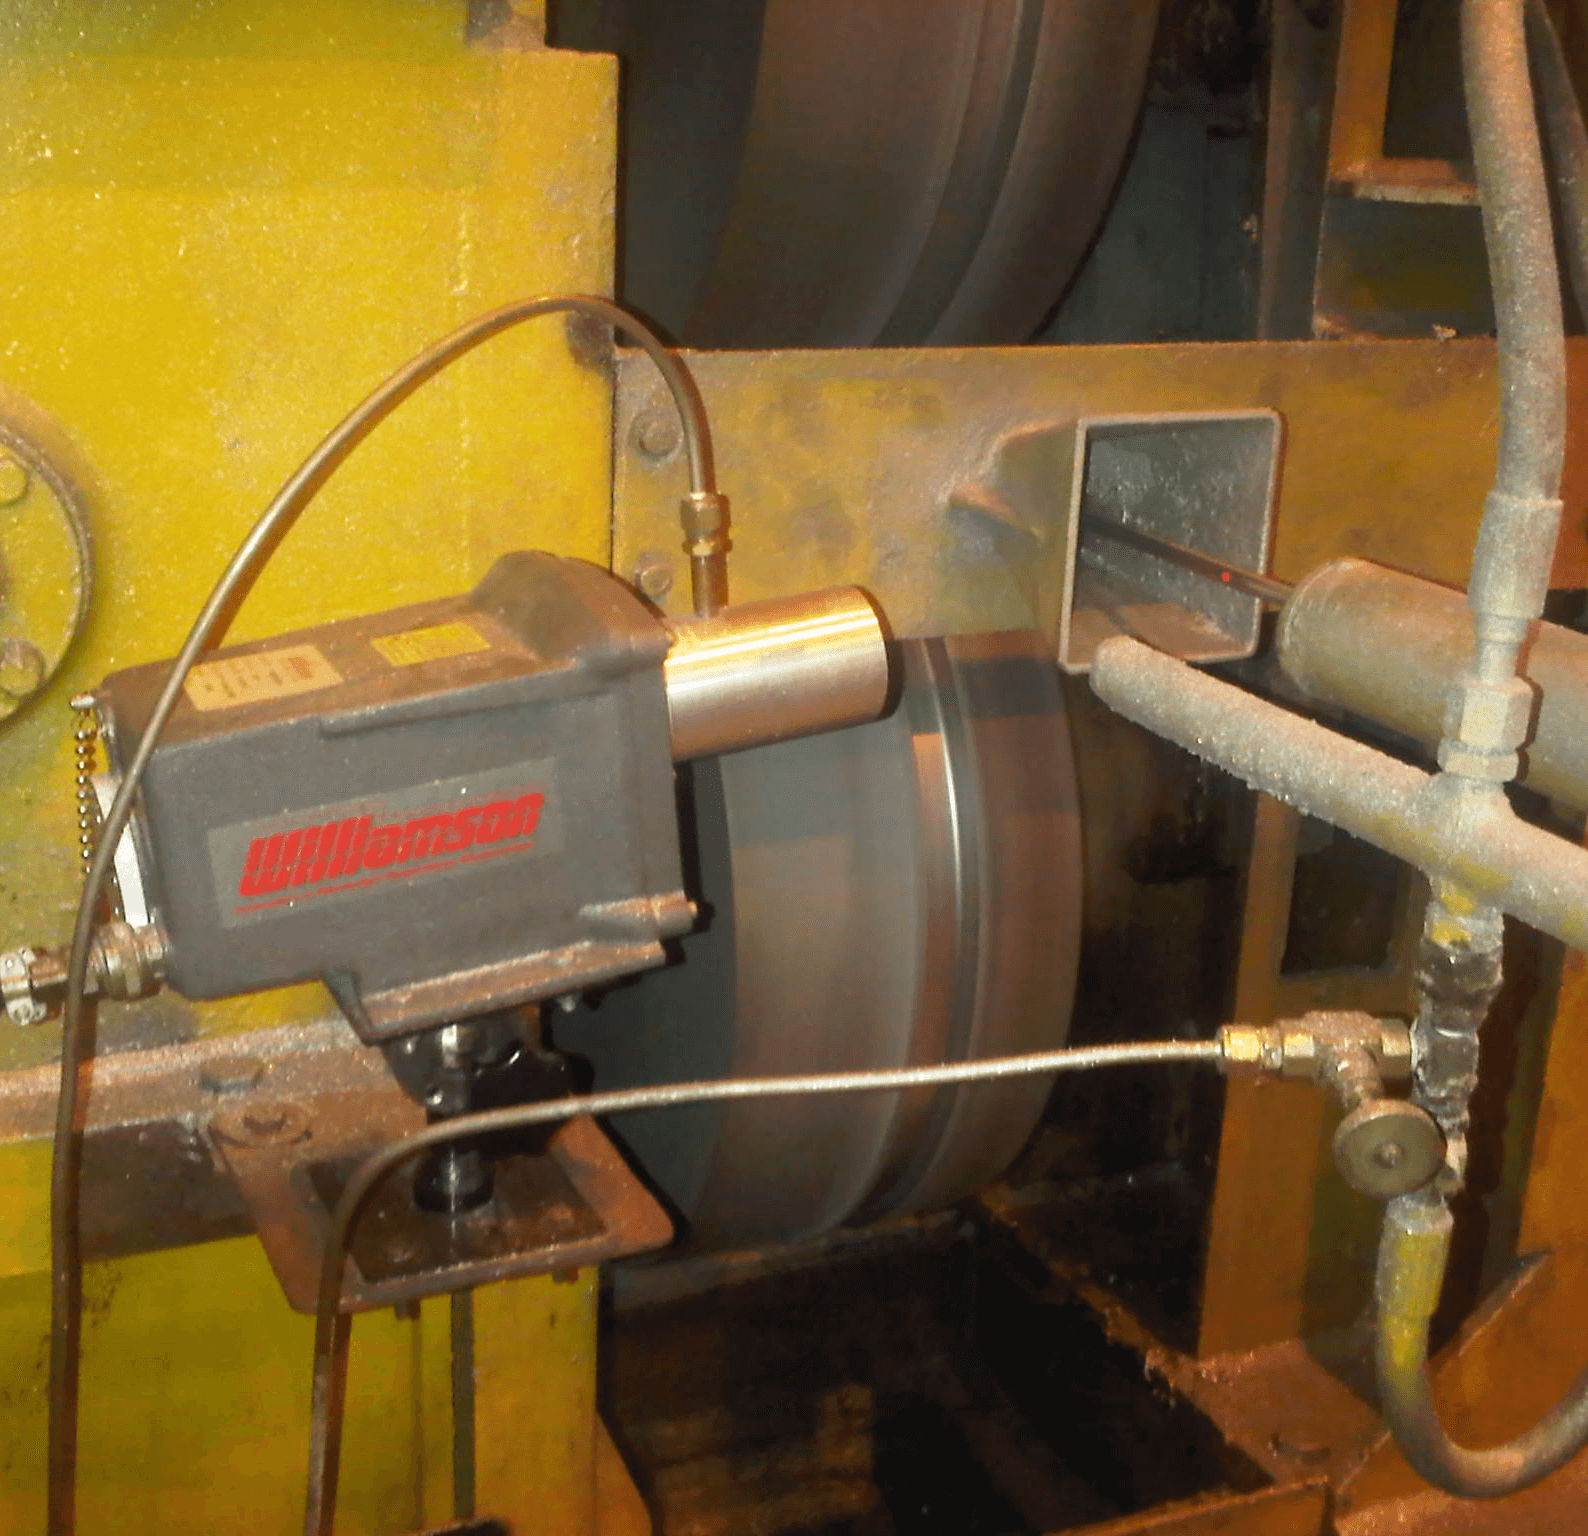 Williamson Pyrometer measuring aluminum wire temperature as it enters the winder